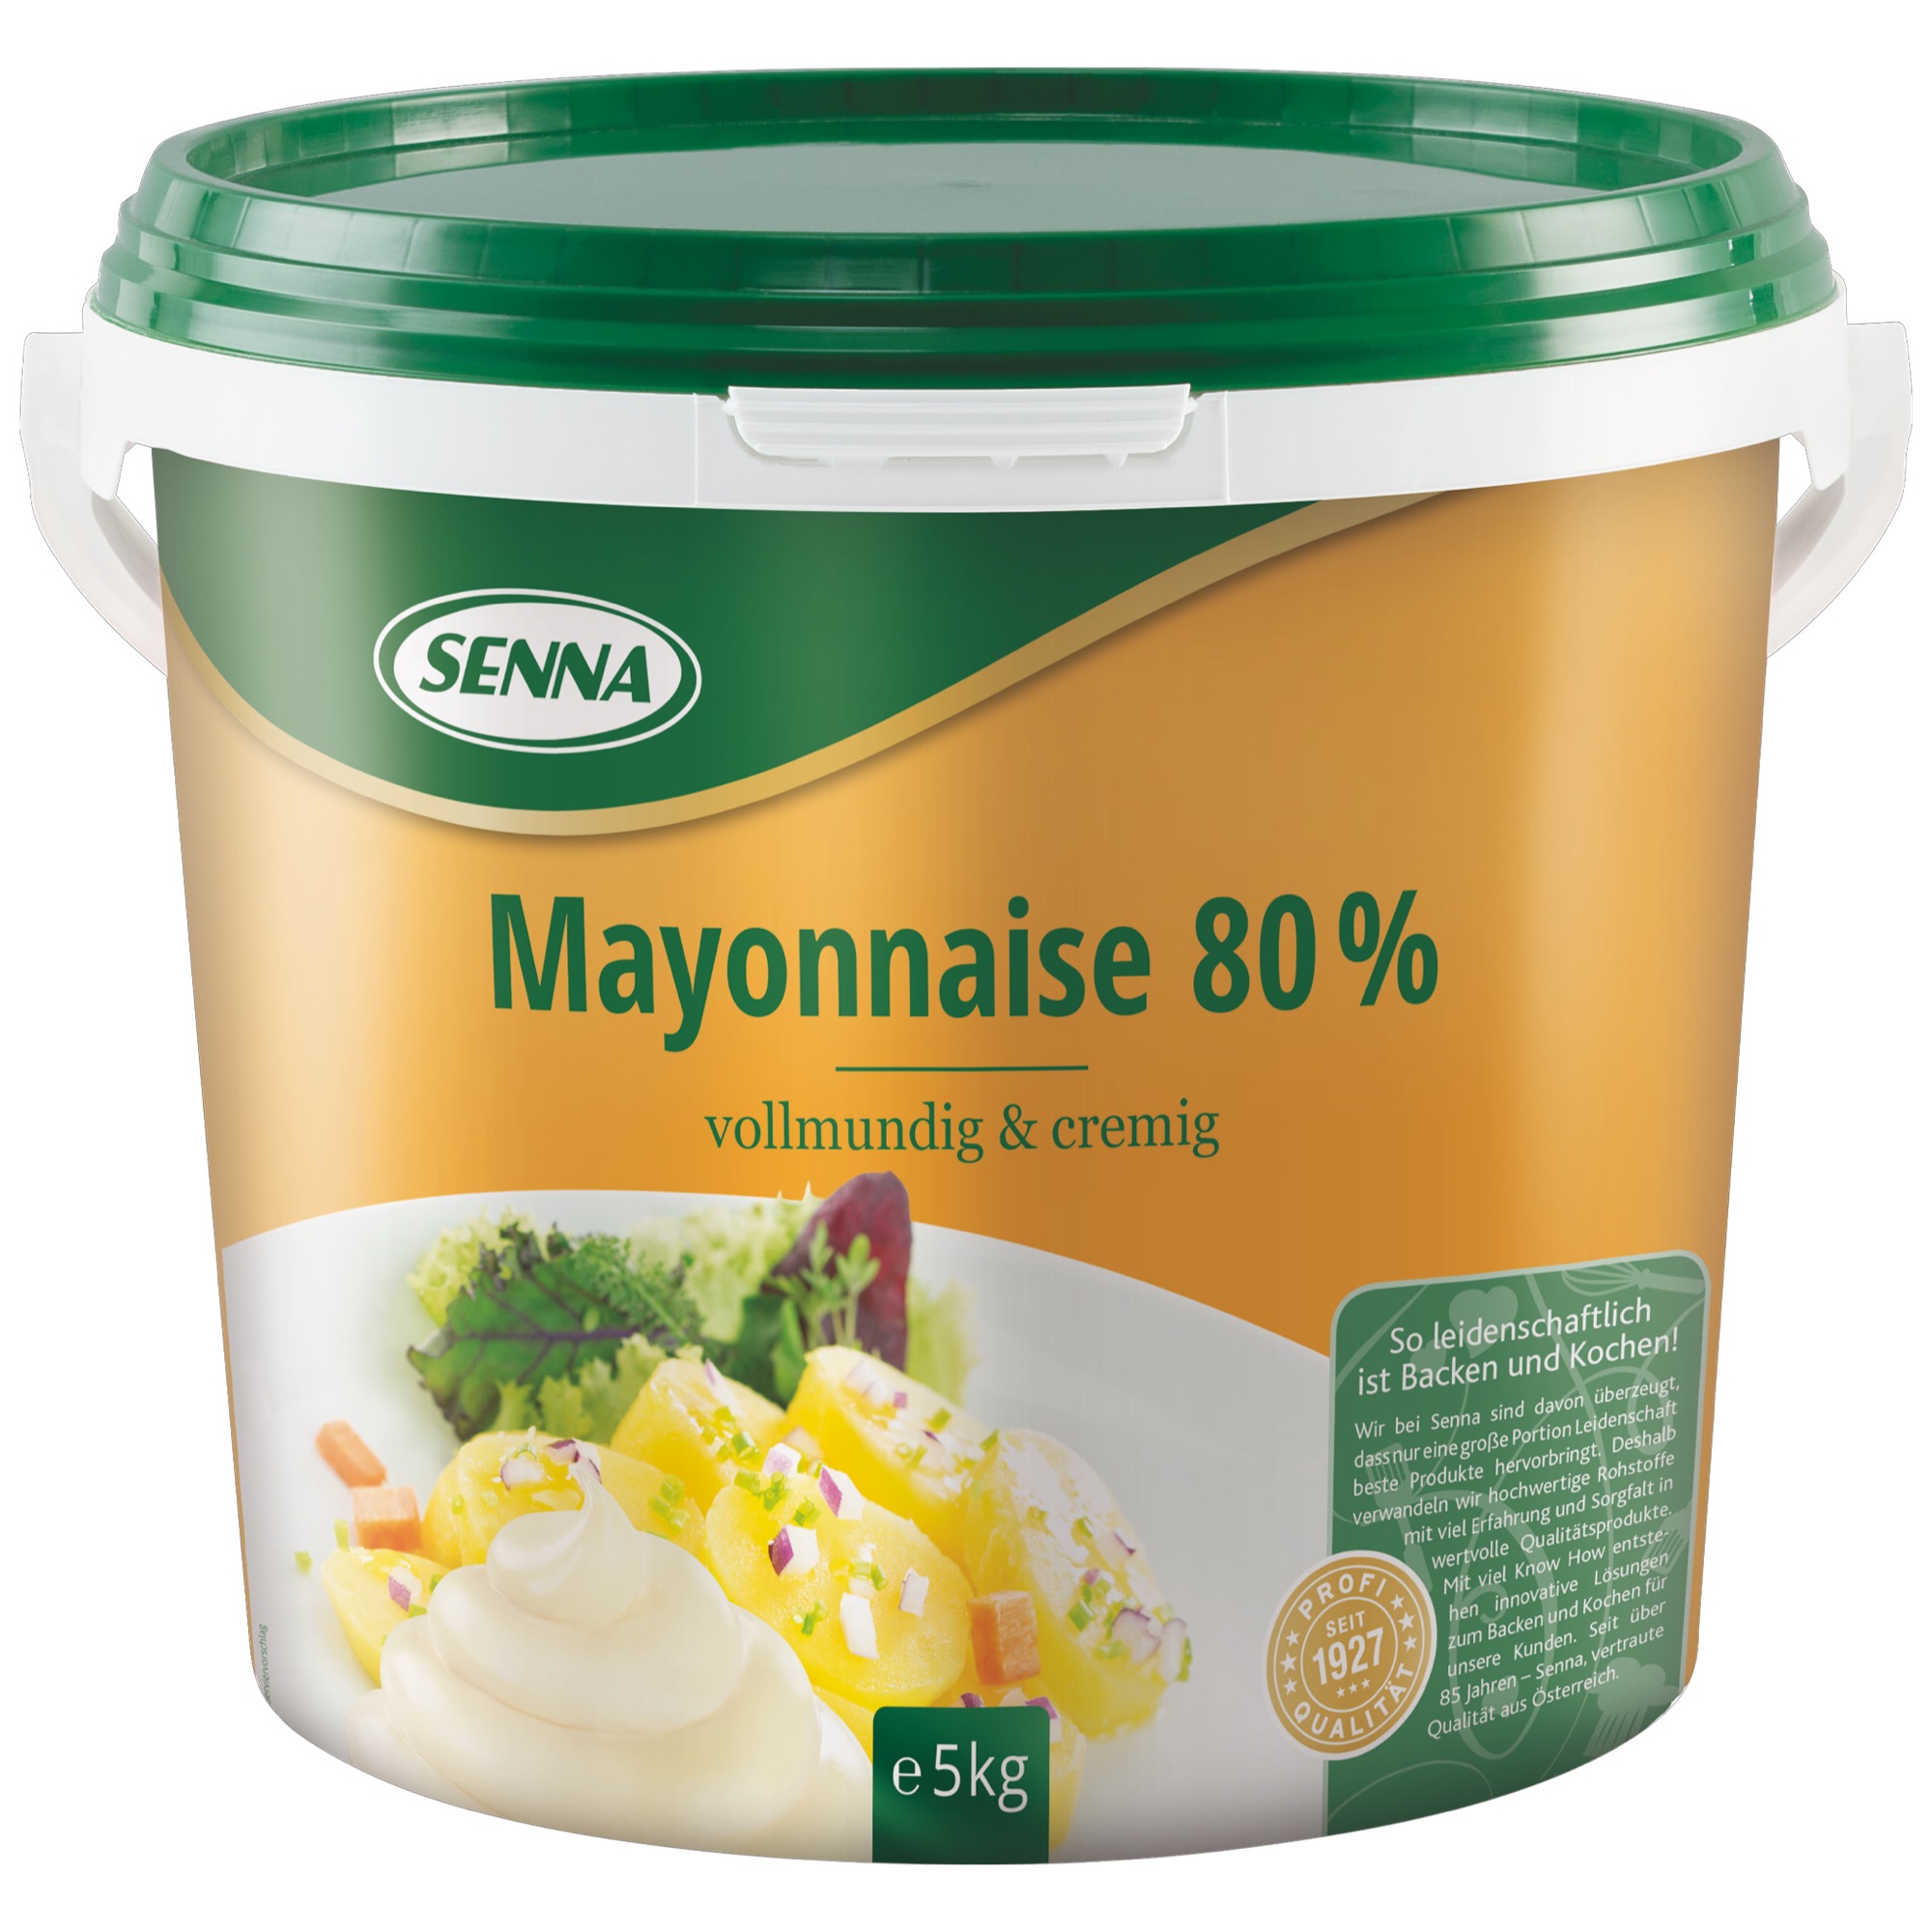 Senna majonéza 80% tuku 5kg